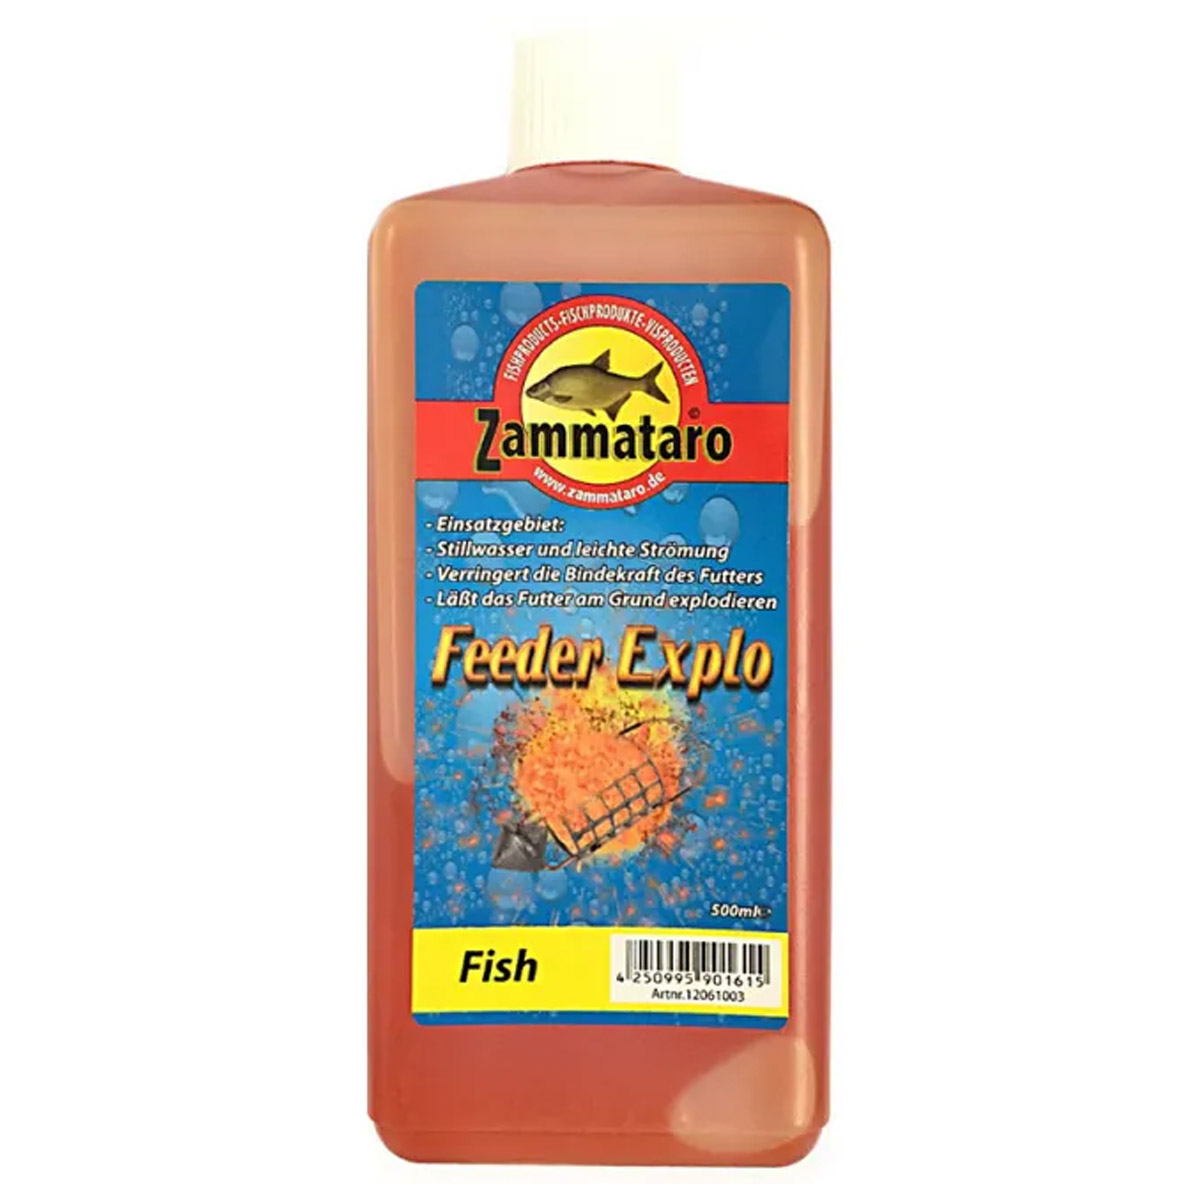 Zammataro Feeder Explo Fish 500ml